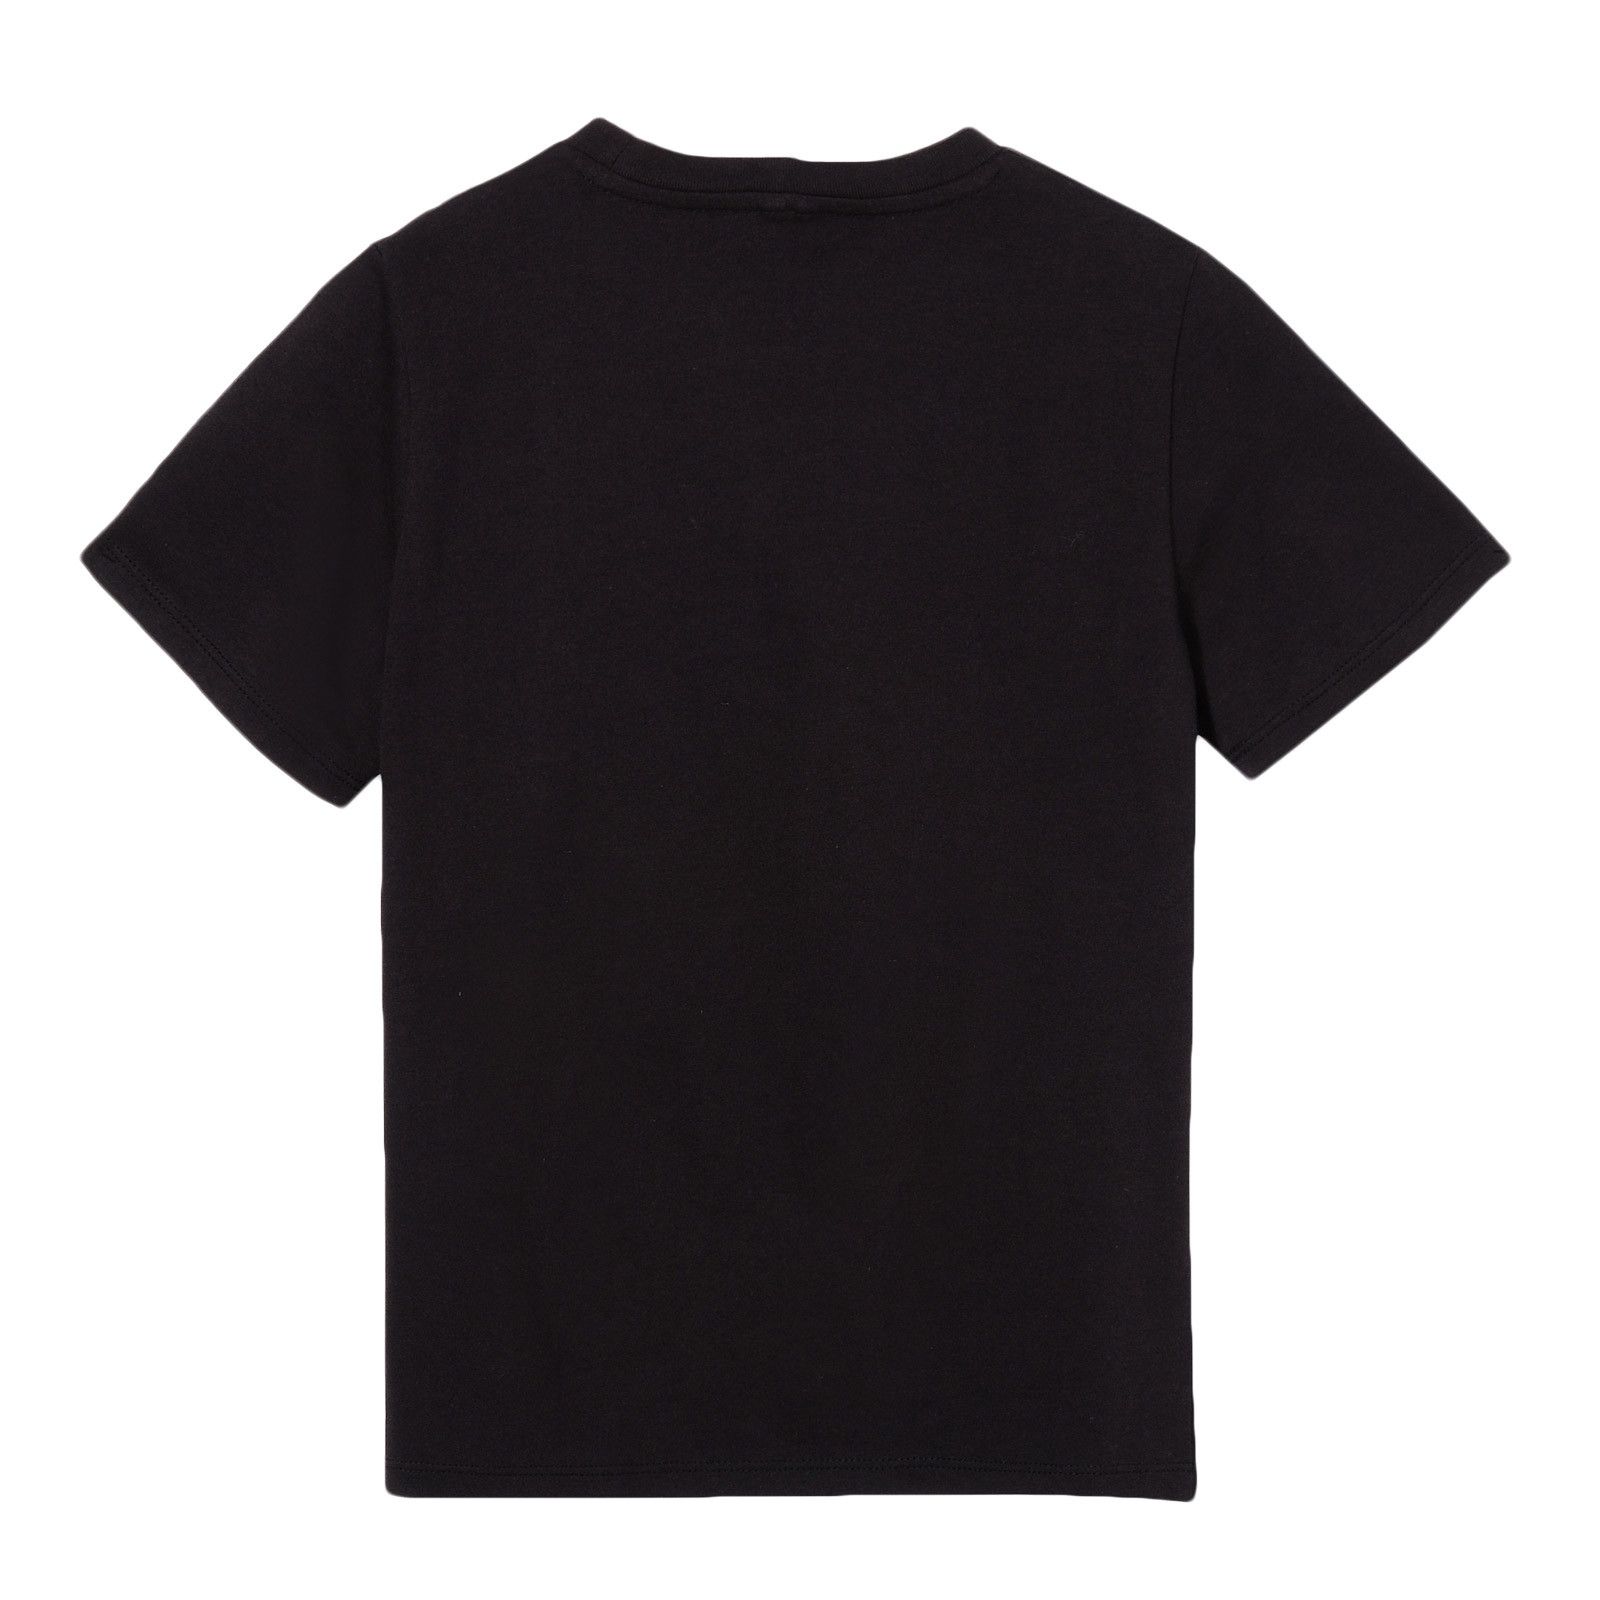 Boys Black Sugar Skull Printed Trims T-Shirt - CÉMAROSE | Children's Fashion Store - 2